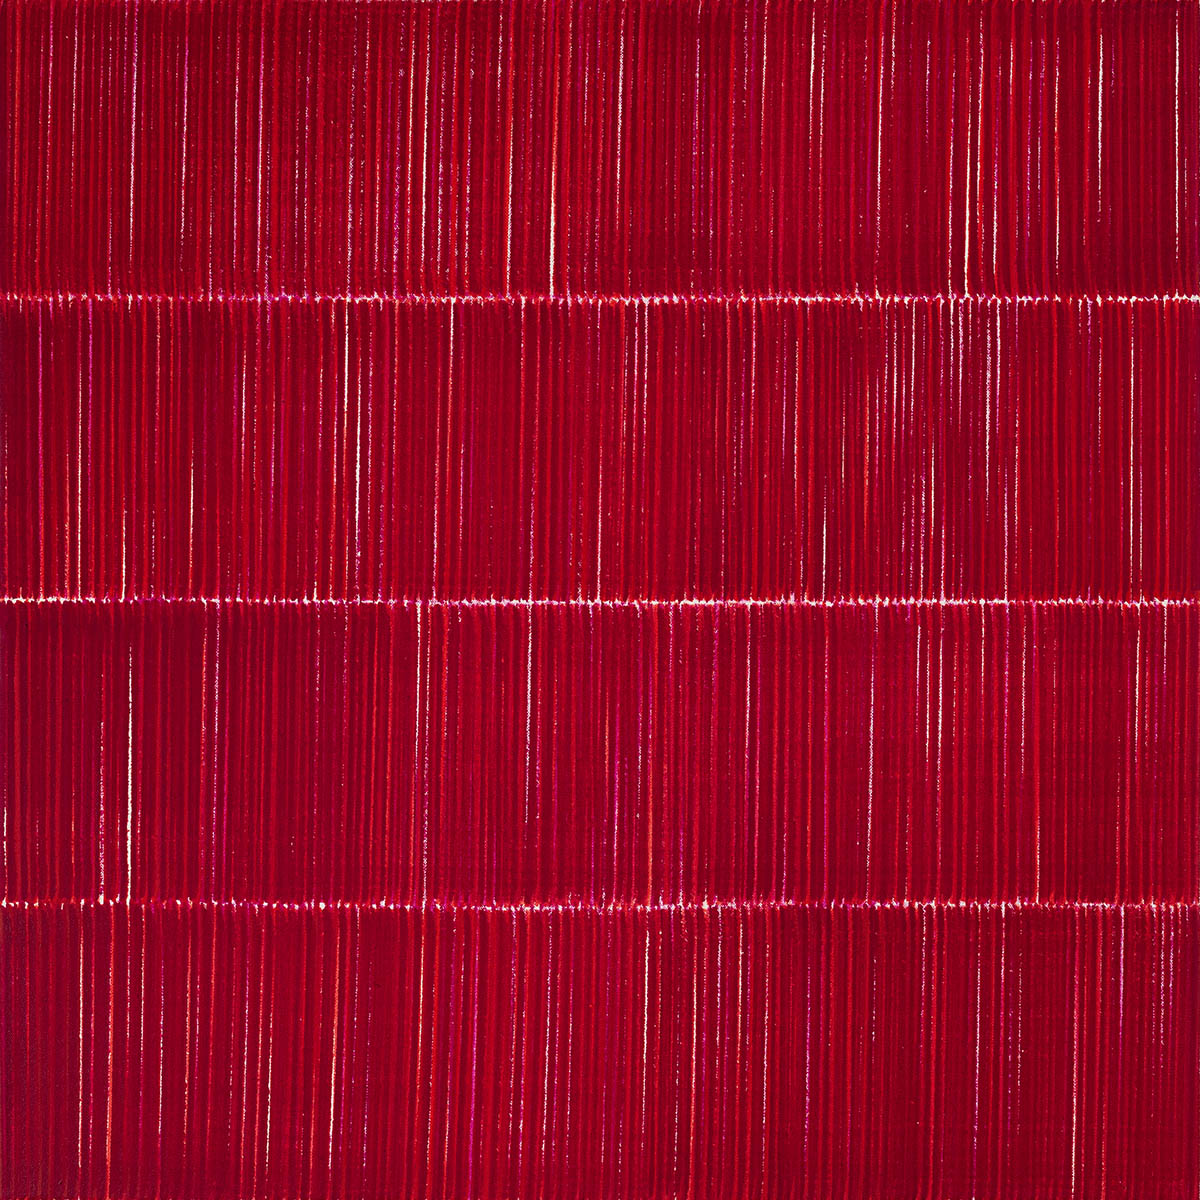 Nikola Dimitrov, RoterKlang, 2022, Pigmente, Bindemittel auf Leinwand, 80 × 80 cm